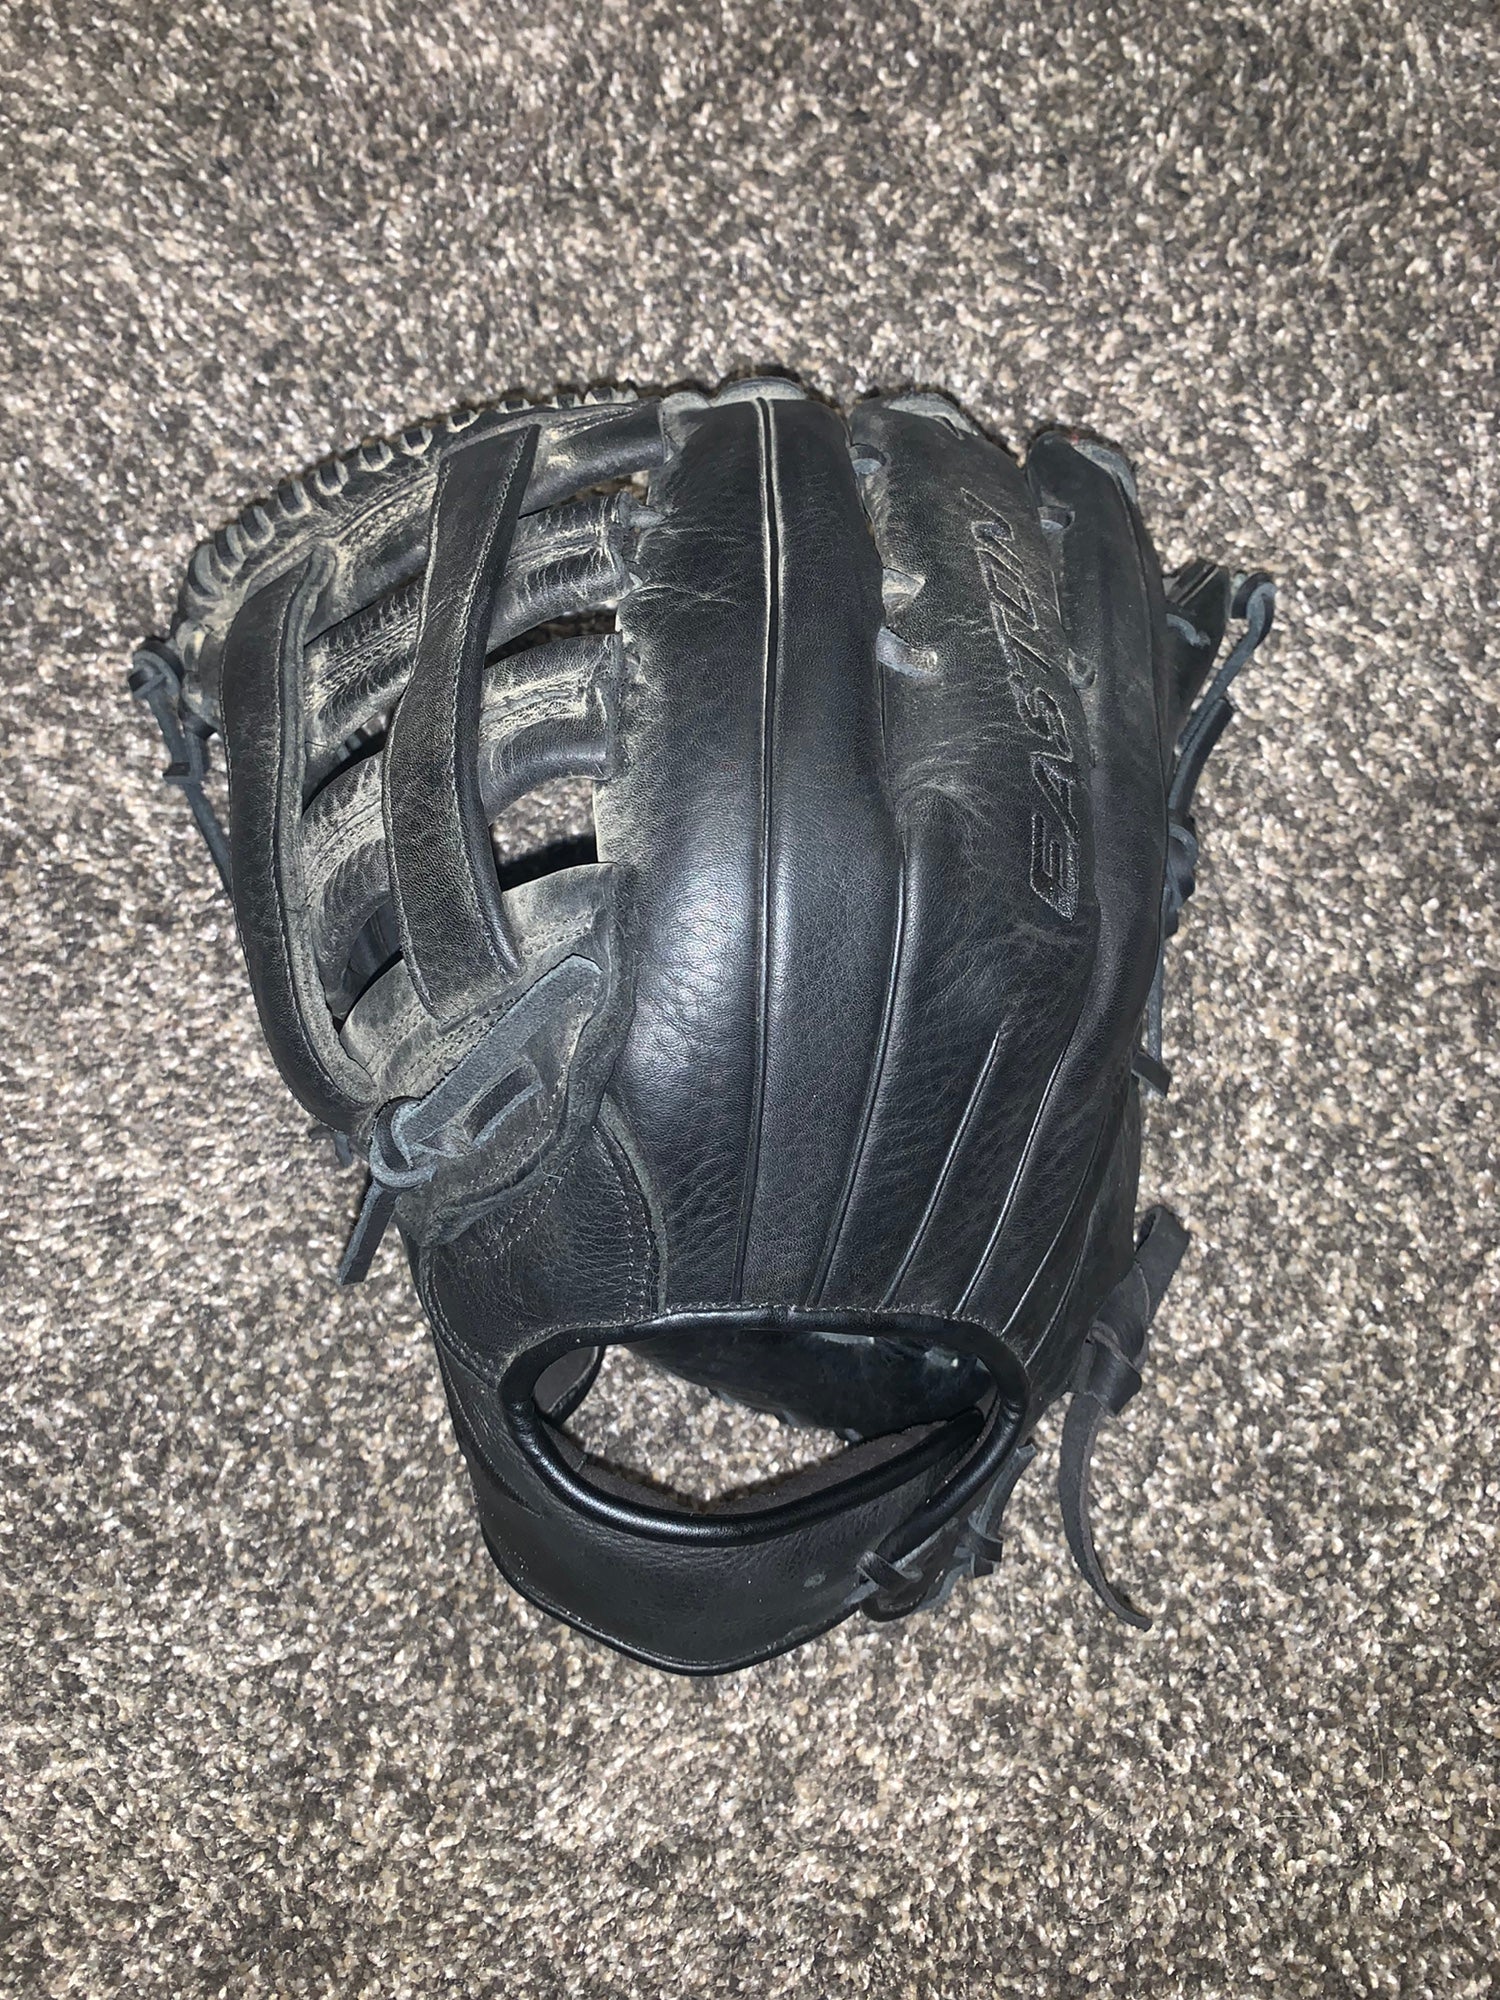 List@$95 Easton Blackstone BL1350SP 13.5" Slowpitch Softball Utility Glove NEW 